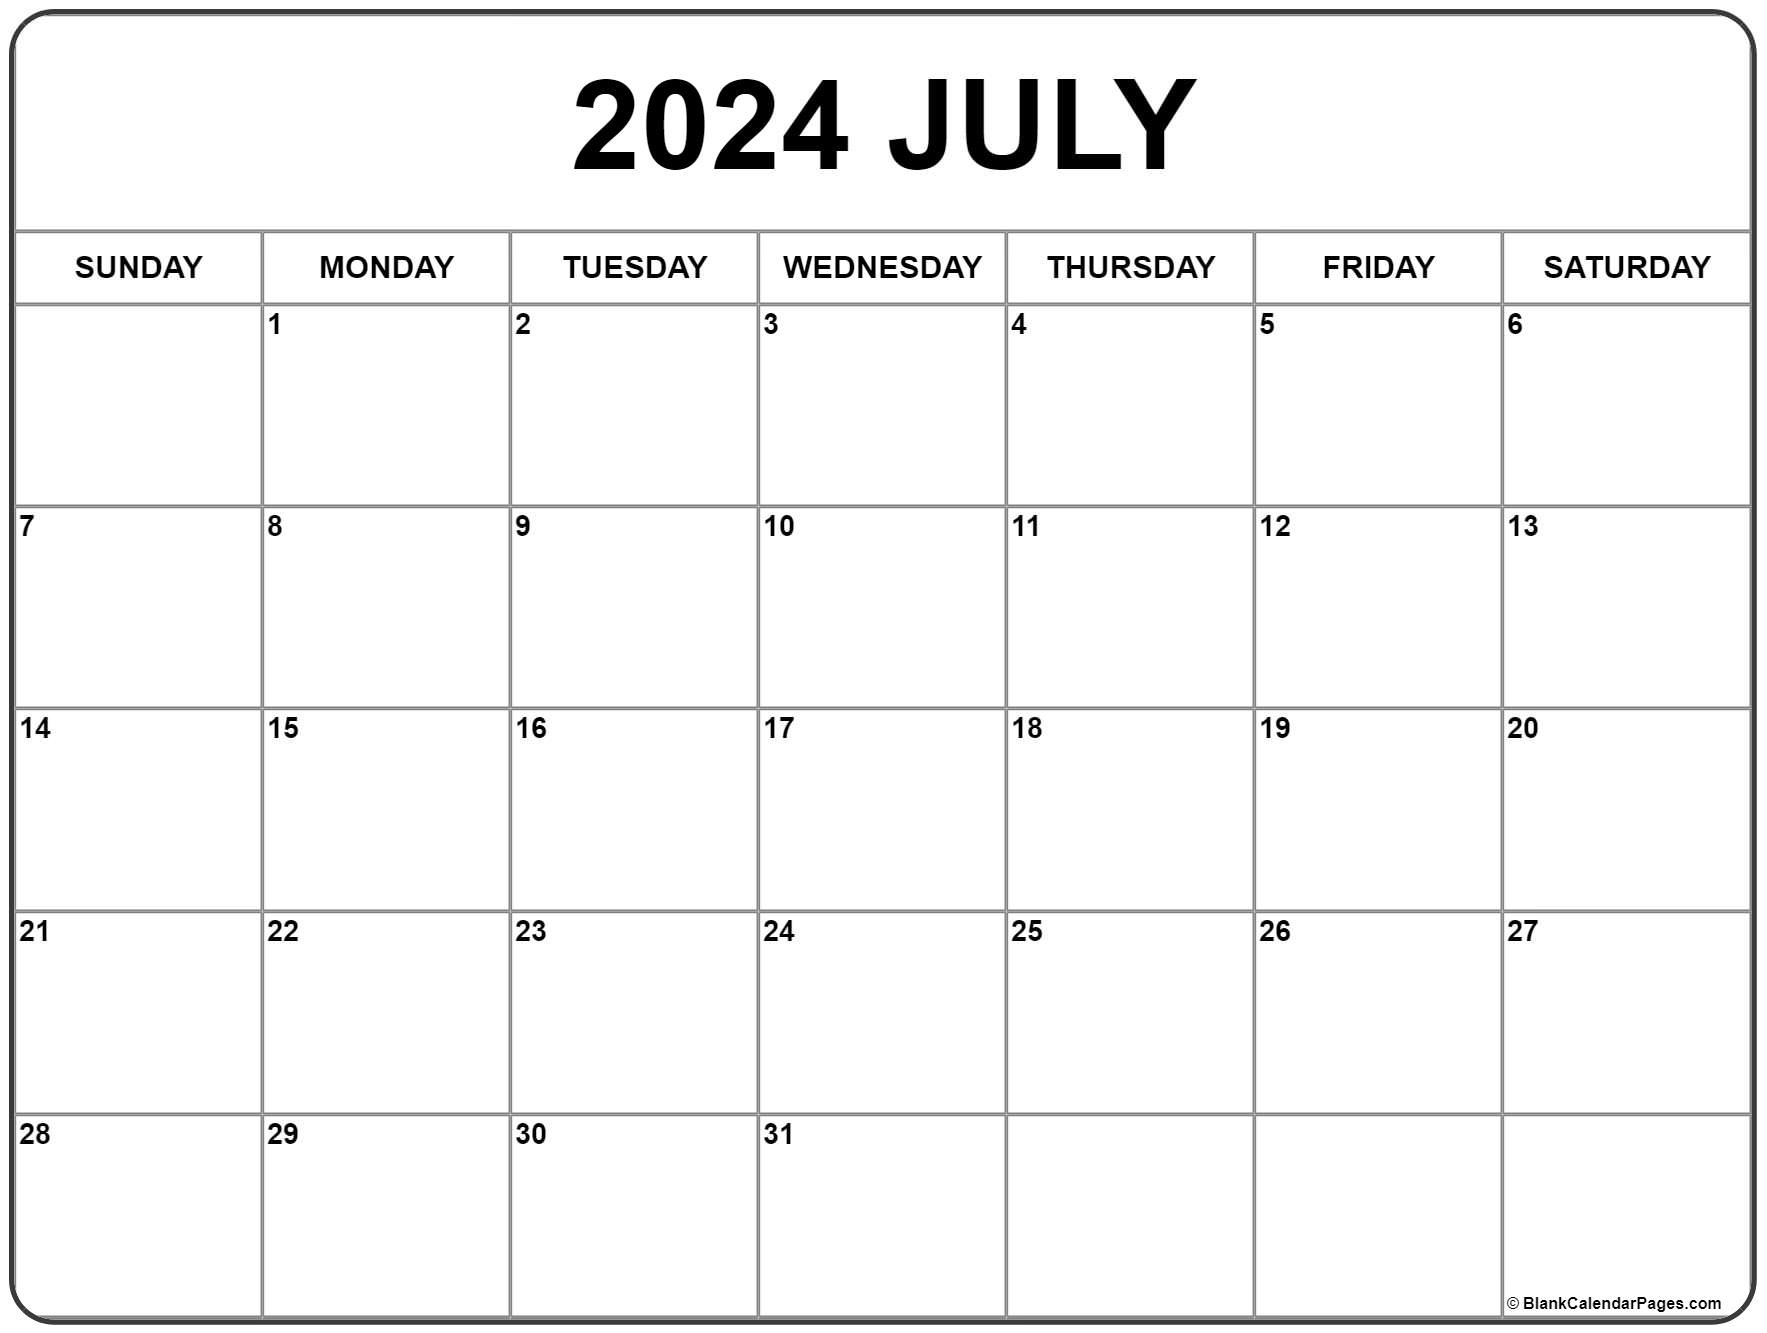 July 2024 Calendar | Free Printable Calendar with regard to 2024 Calendar July Month